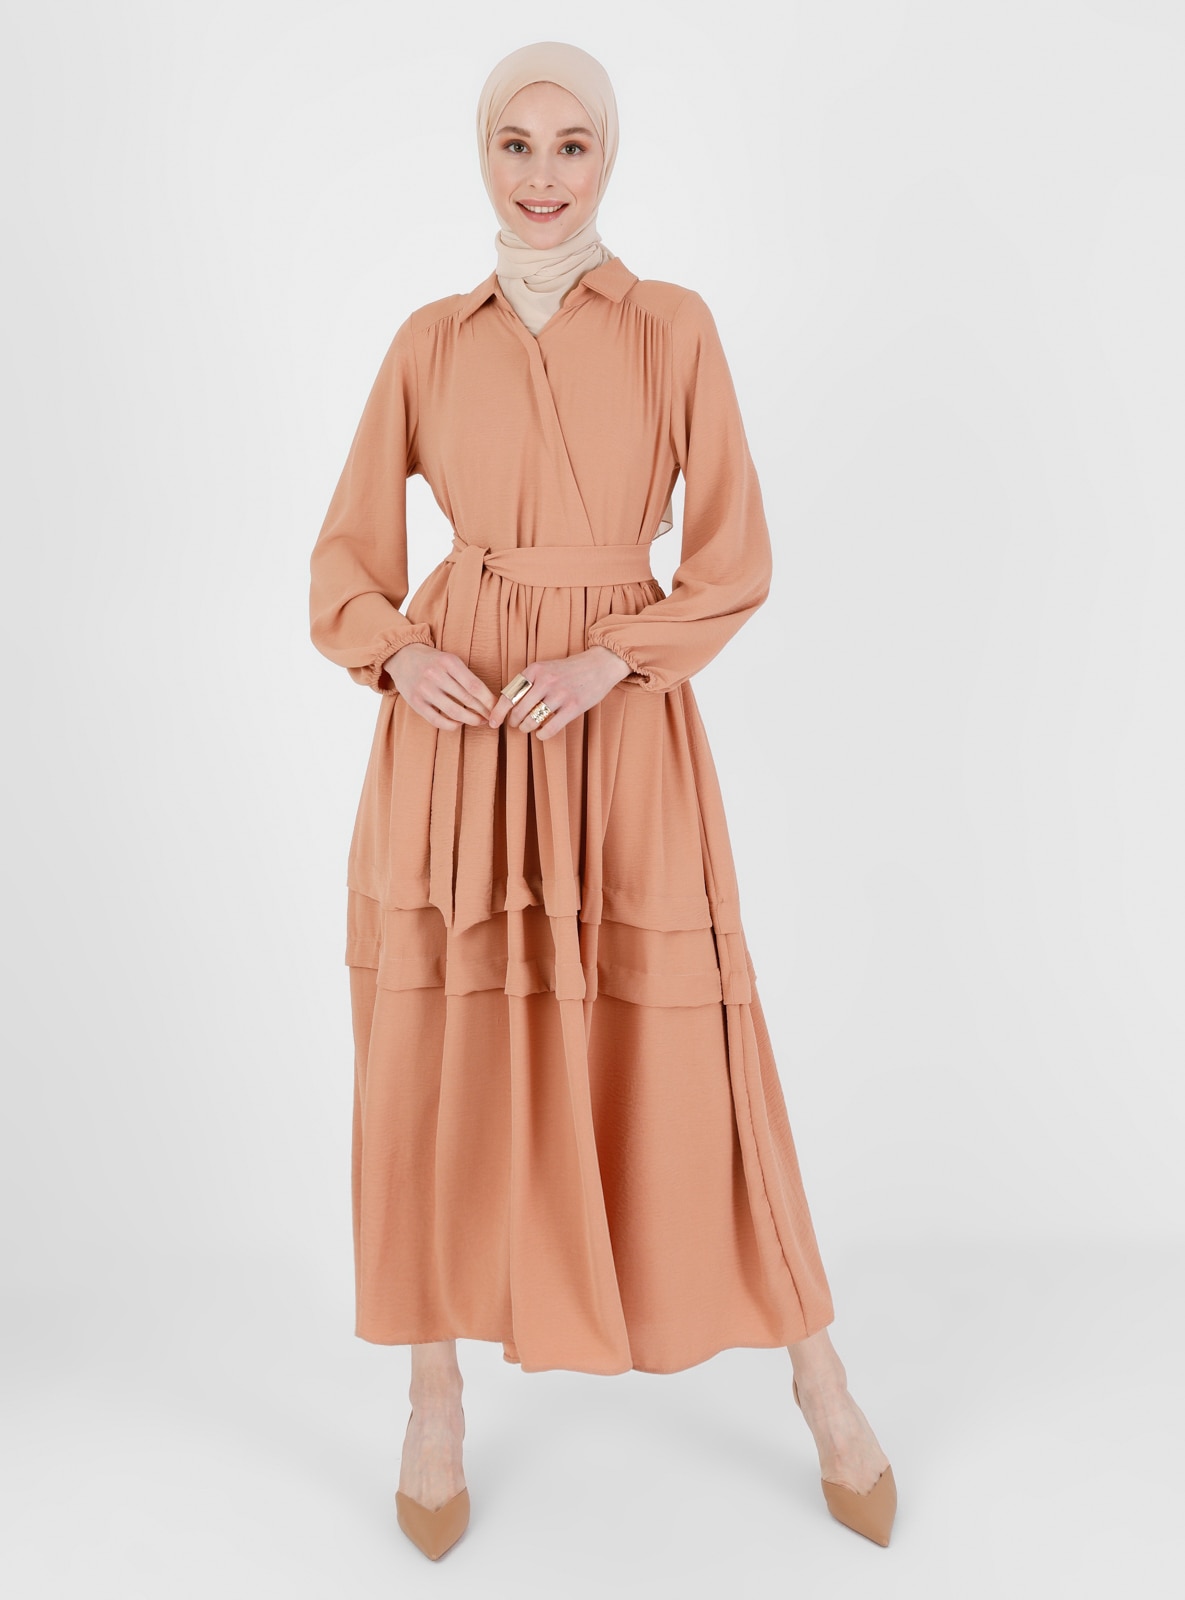 Orange - Point Collar - Unlined - Modest Dress